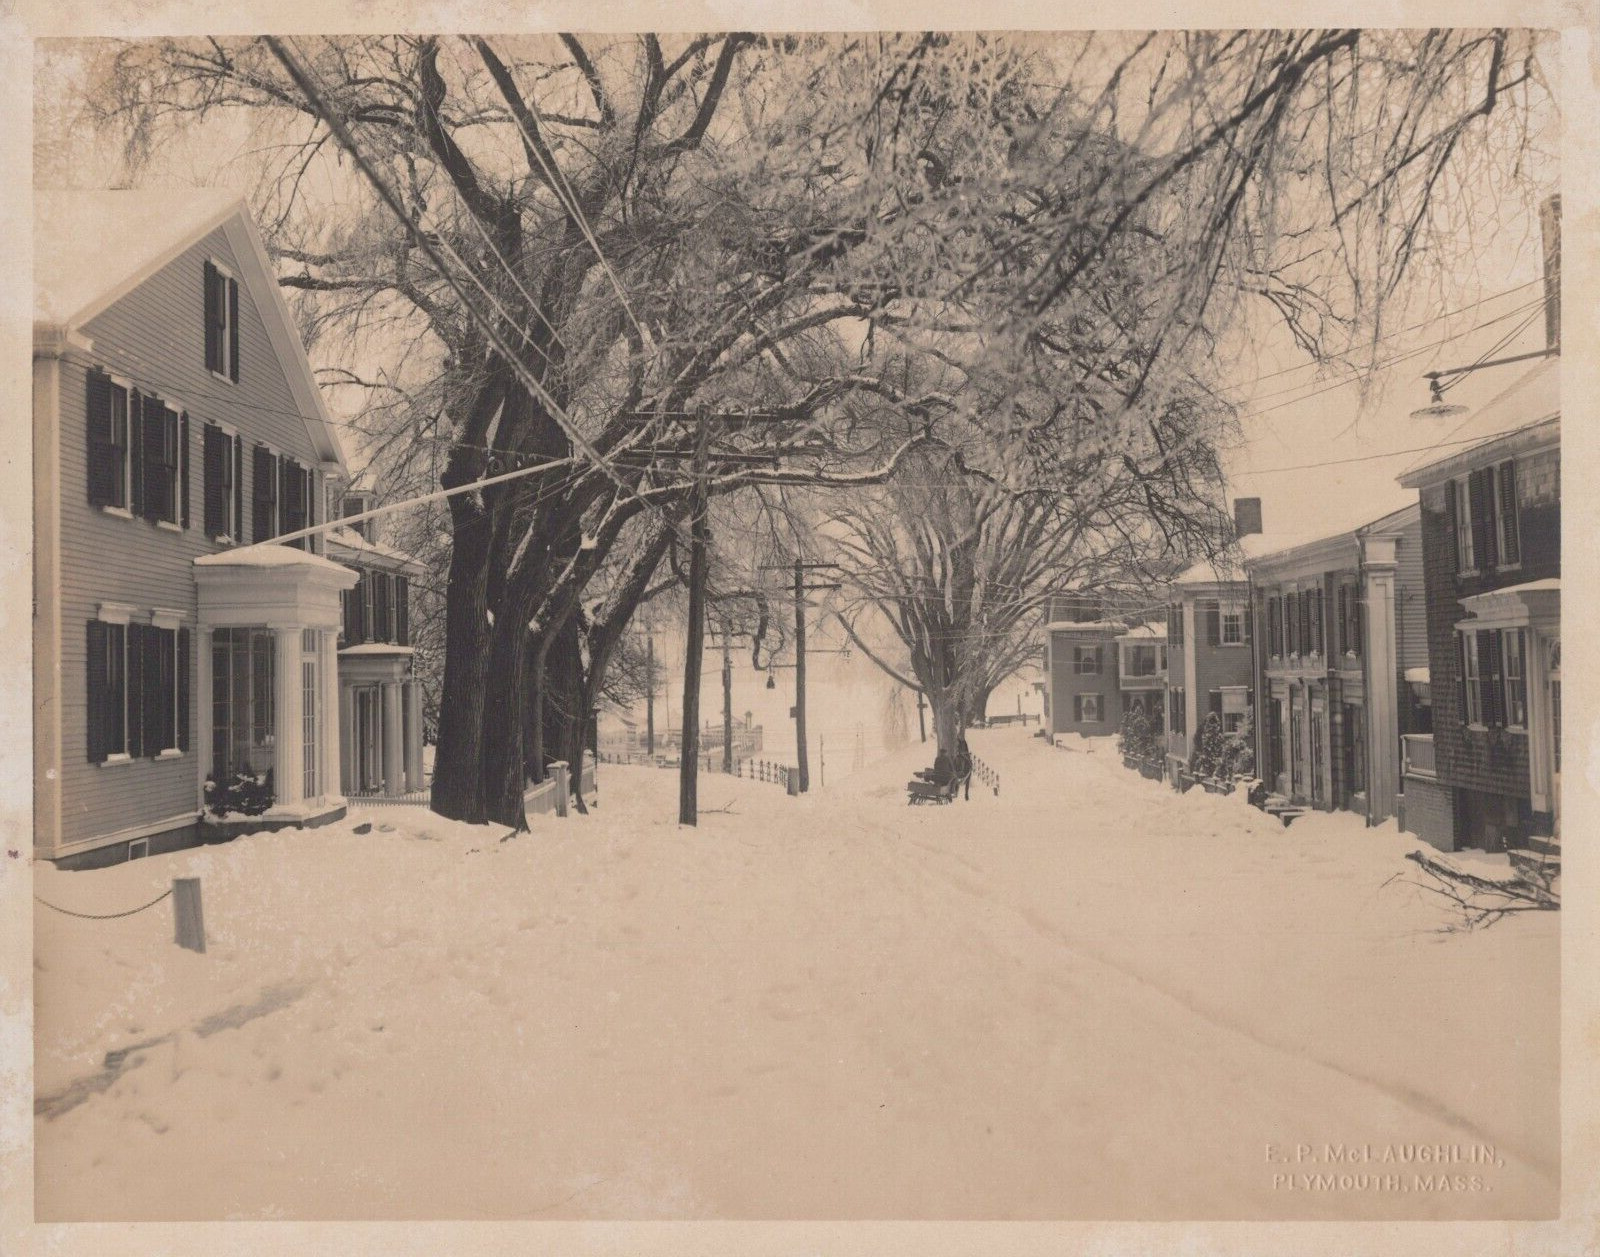 PLYMOUTH MASS CITY STREET SCENE UNDER SNOW E.P McLAUGHLIN 1940s ORIG Photo 219